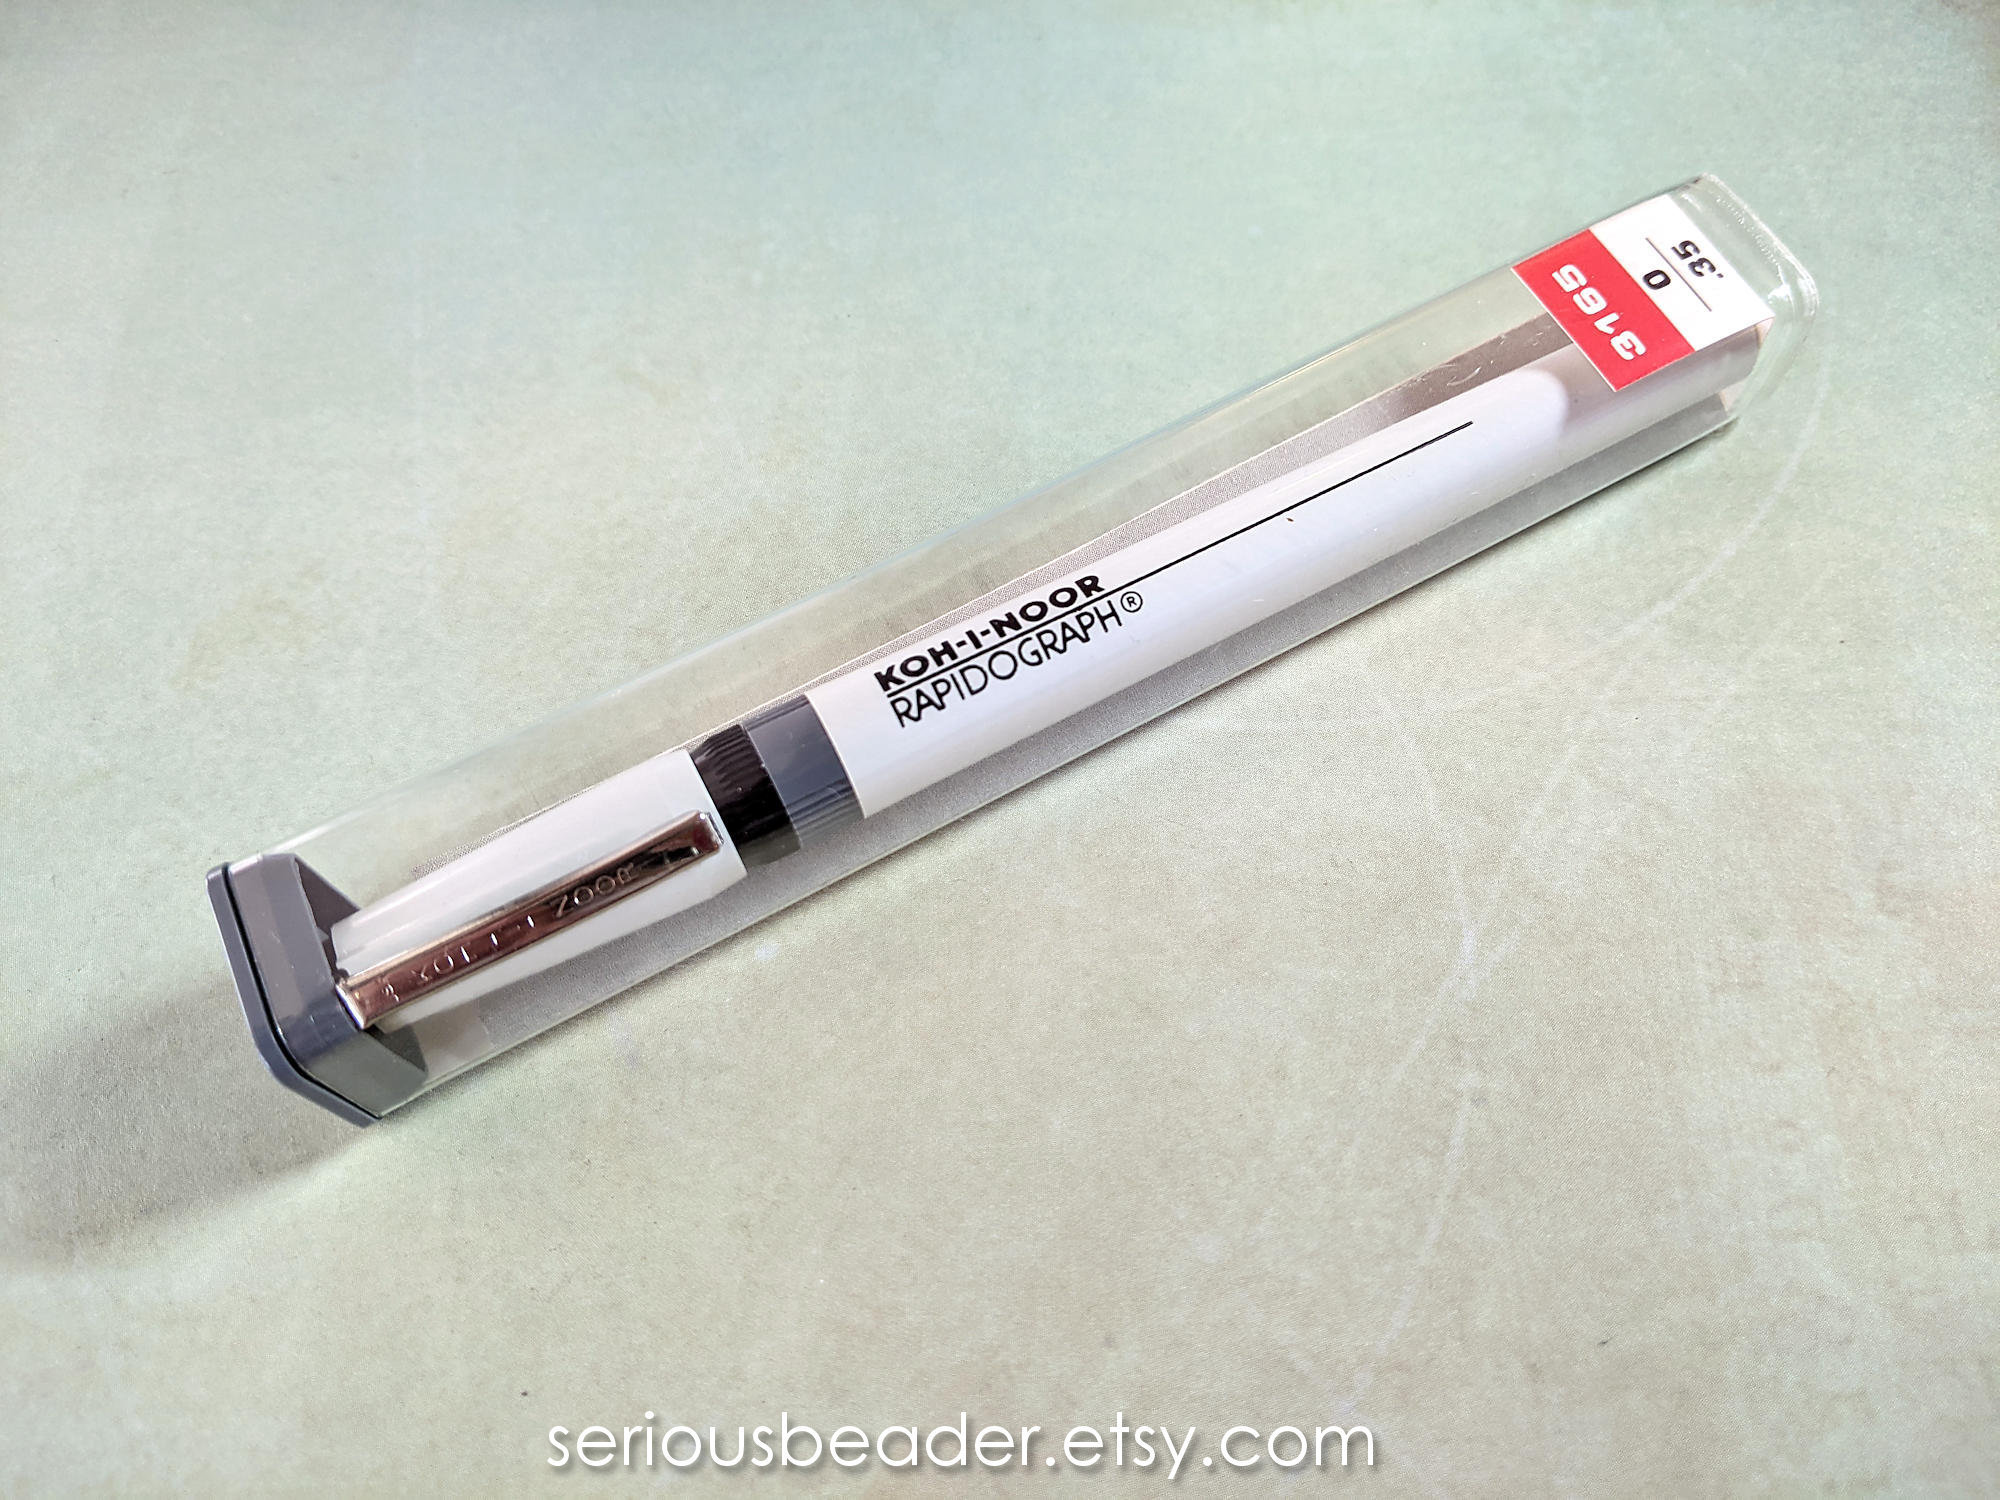 Koh-i-noor Rapidosketch Technical Pen Set, 0.35mm Nib, Stainless Steel  Technical Drawing, Anime, Manga, Comics Drawing 